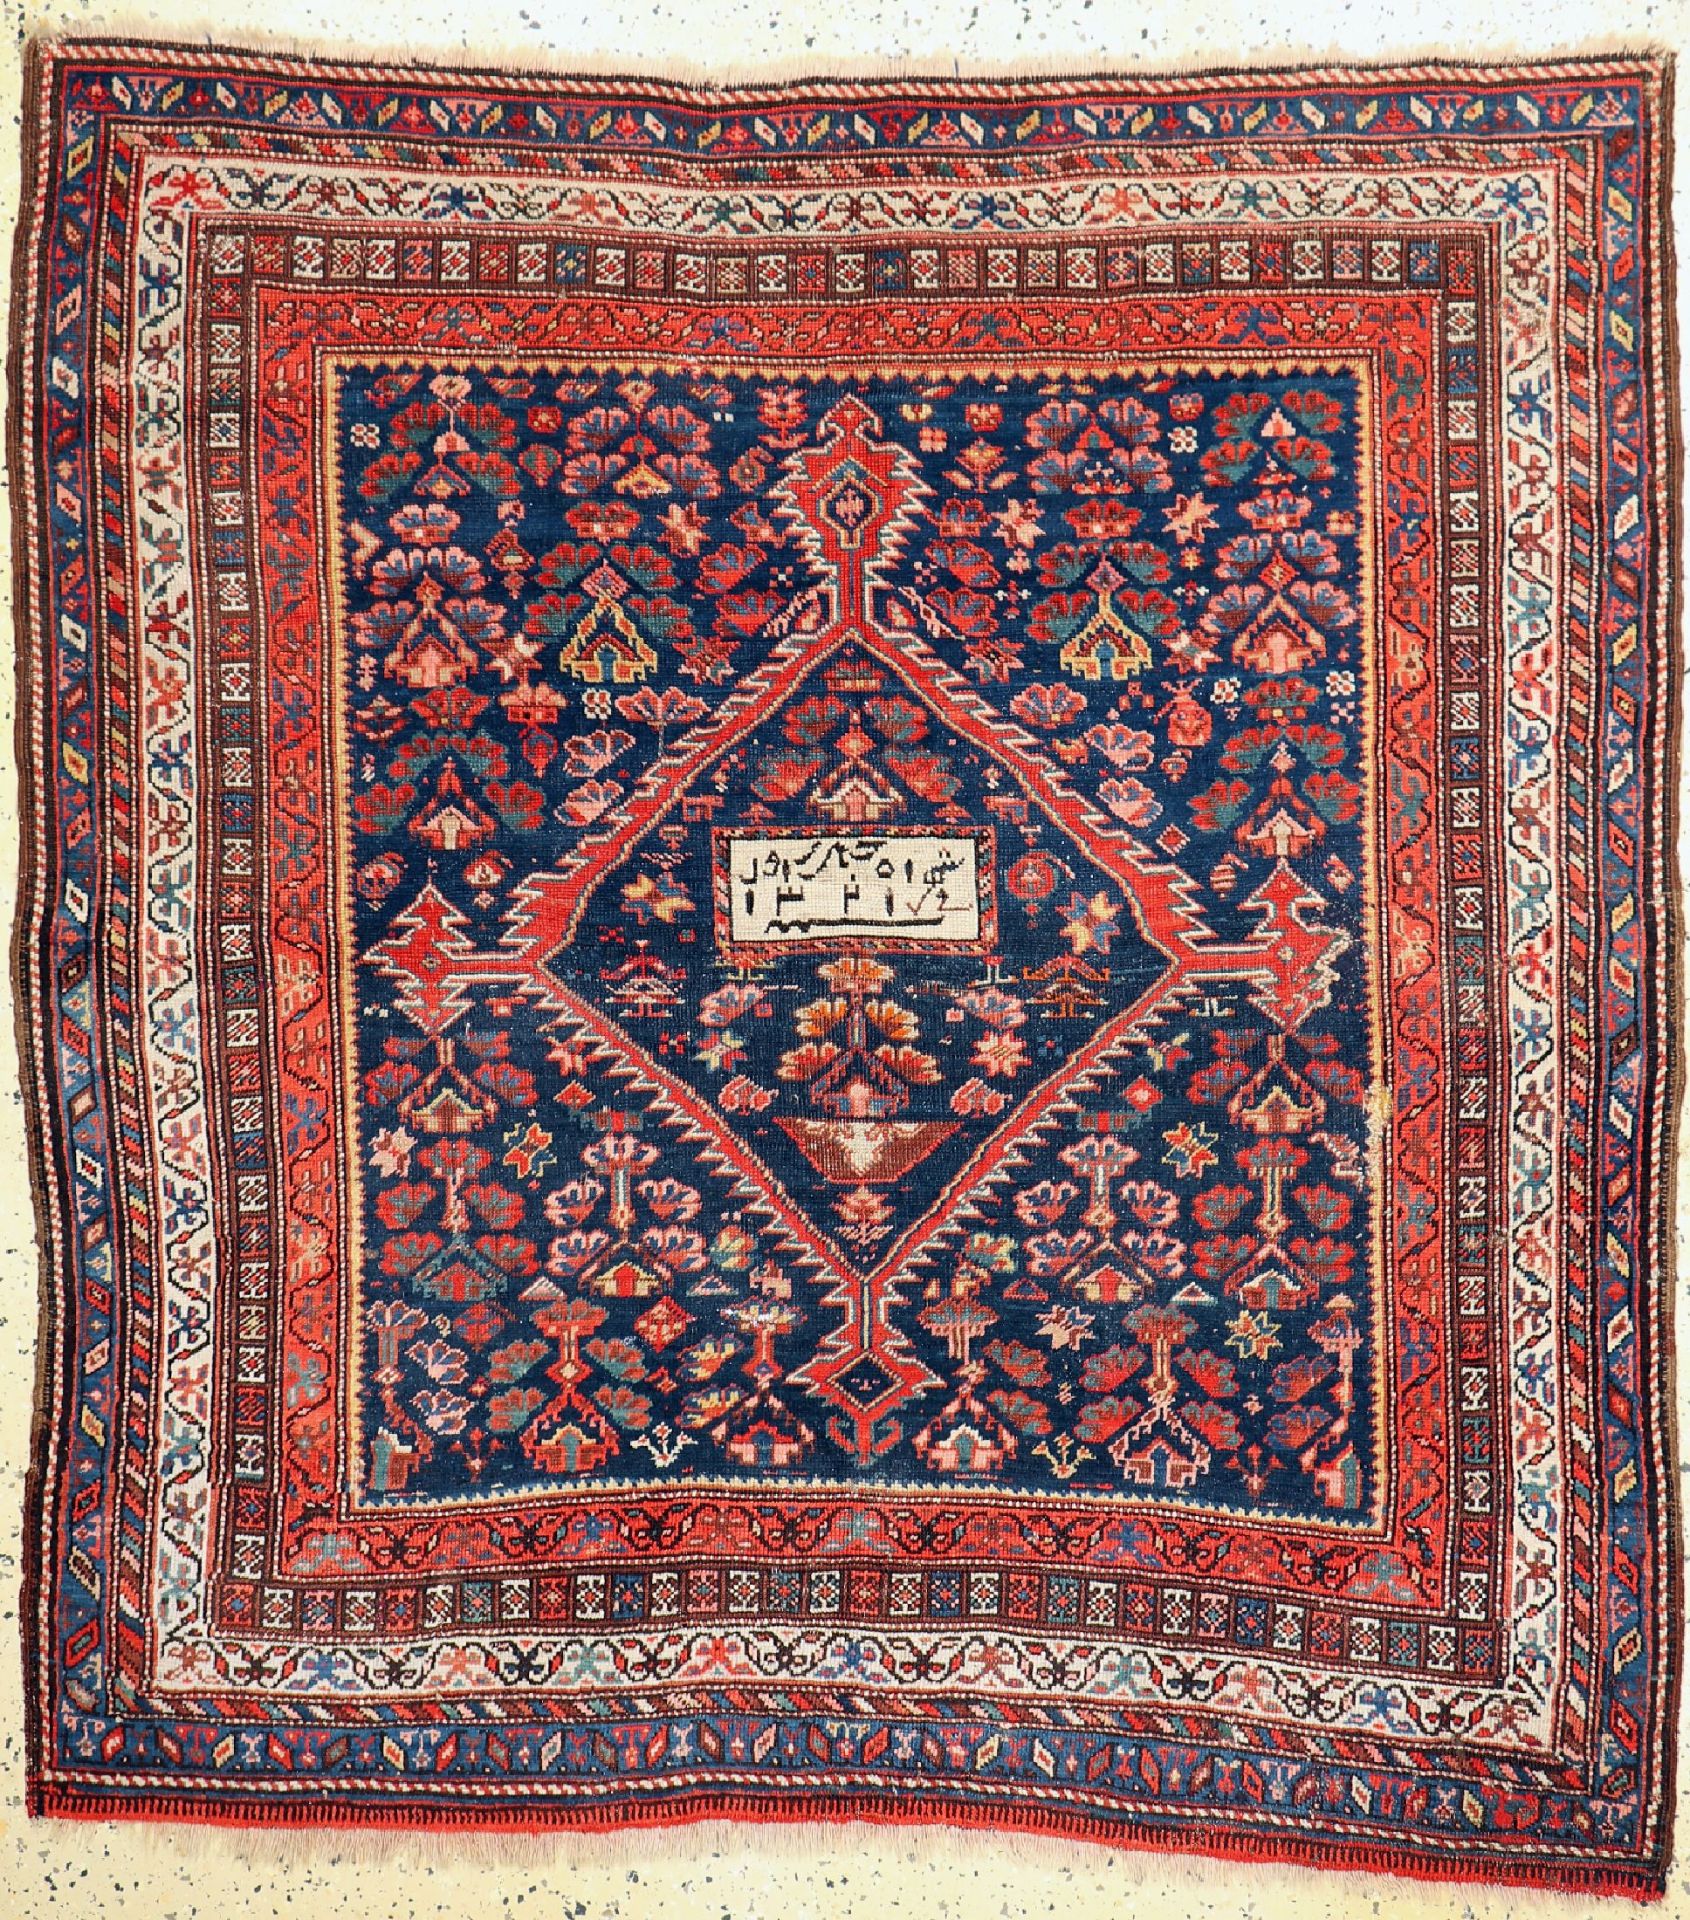 Khamseh antik, Persien, datiert 1321(1900),Wolle auf